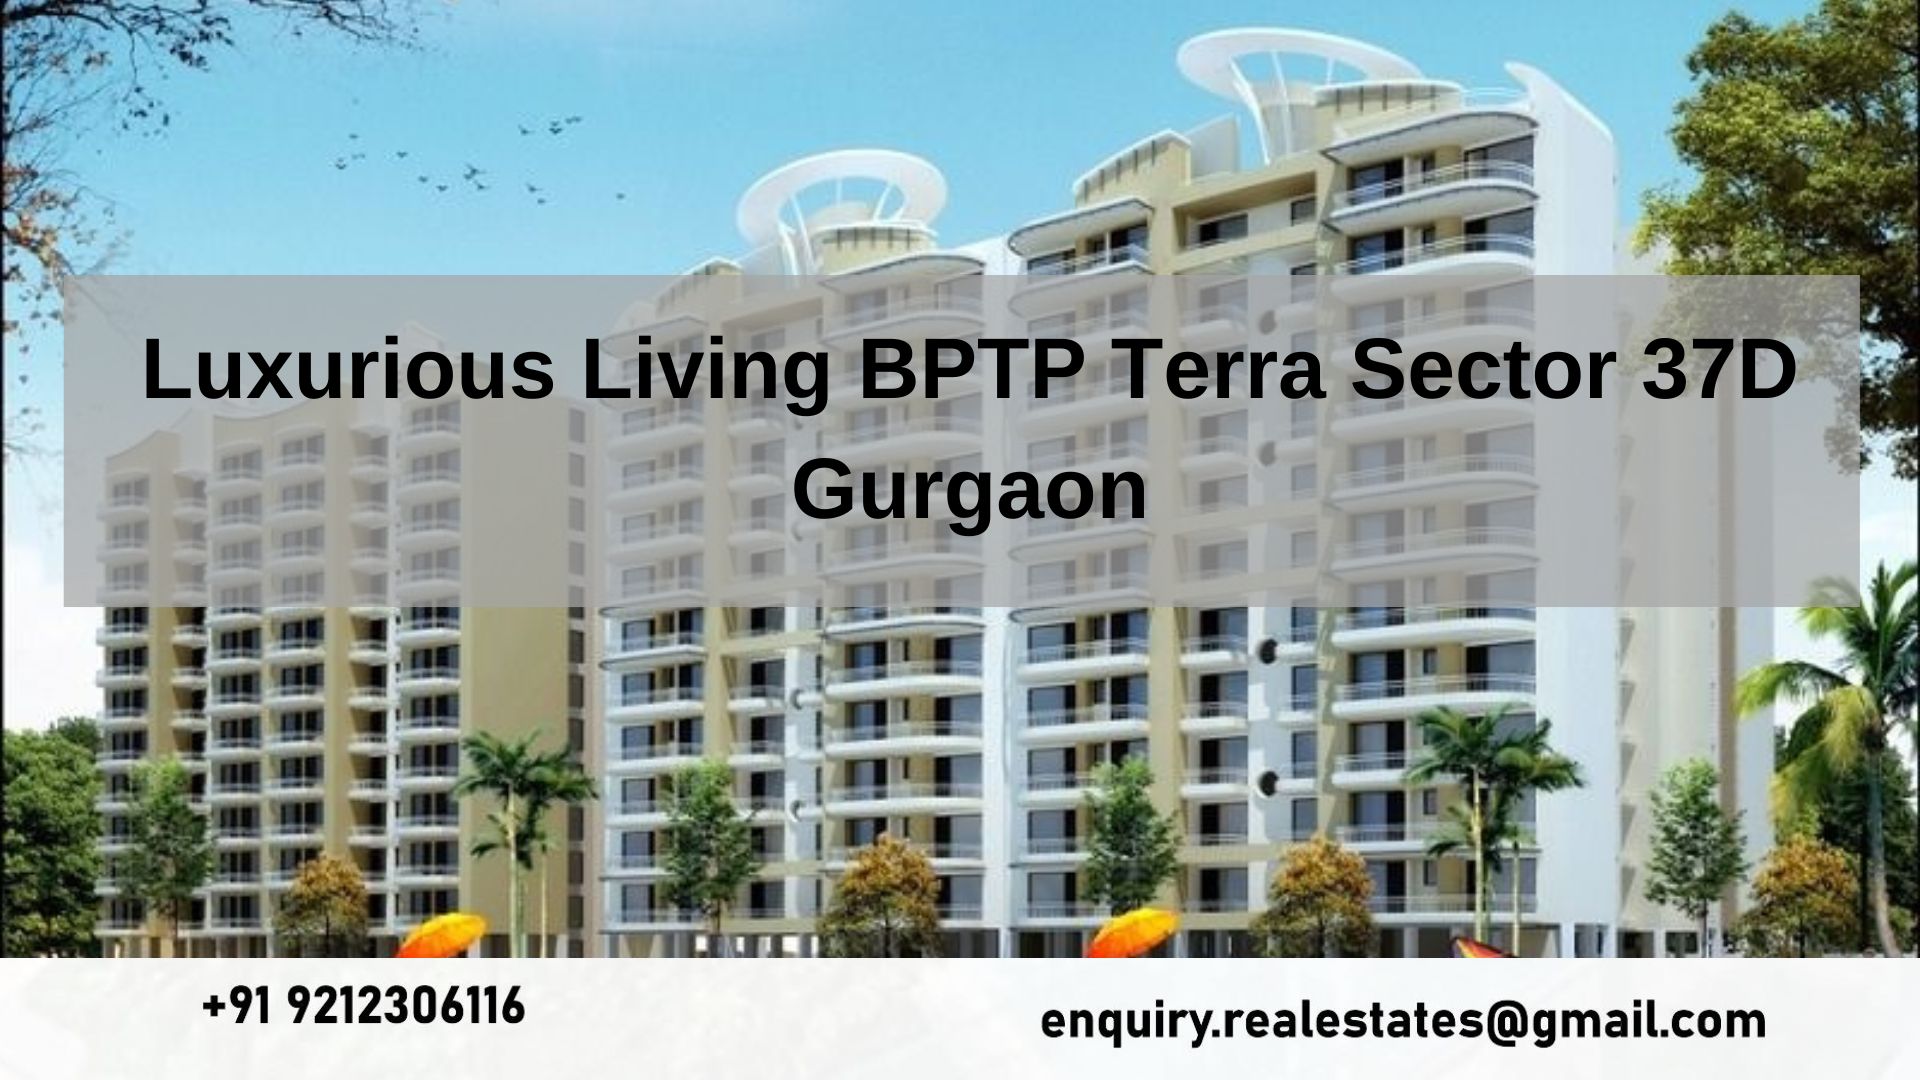 Luxurious Living BPTP Terra Sector 37D Gurgaon